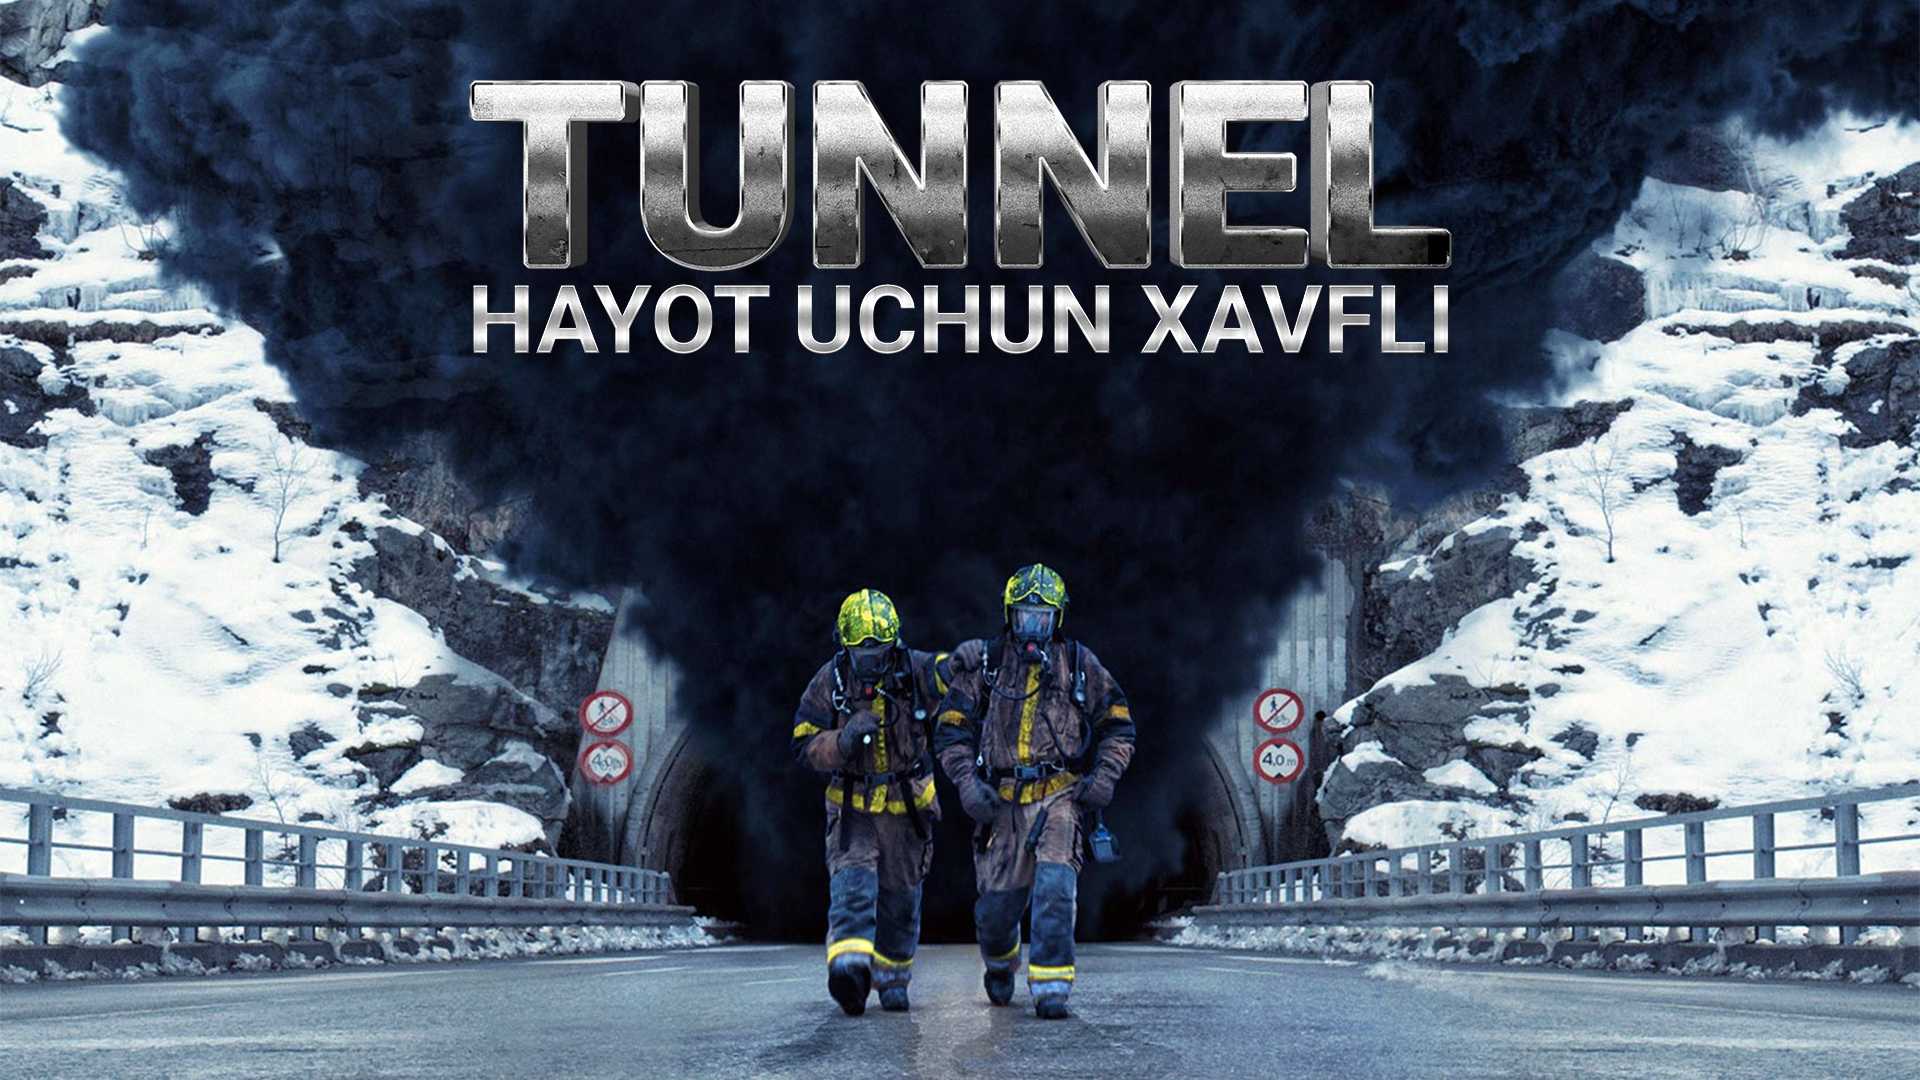 Tunnel - Hayot uchun xavfli